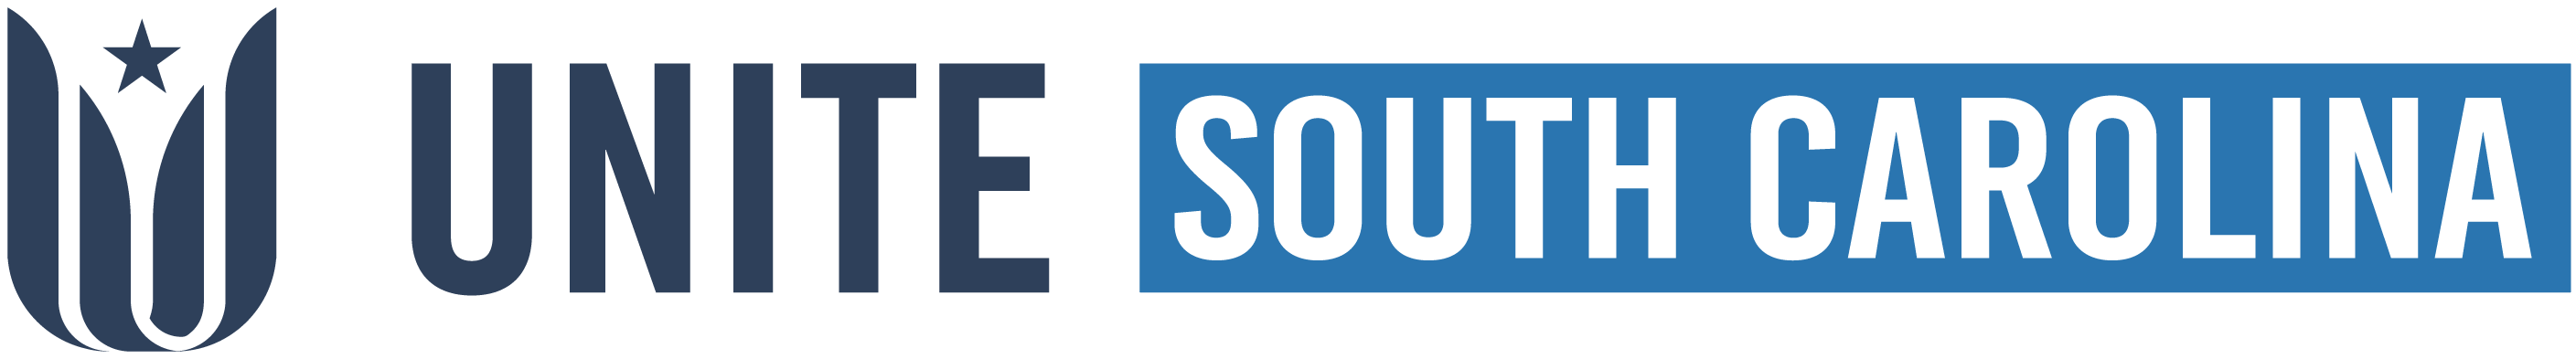 Unite Us SC Logo